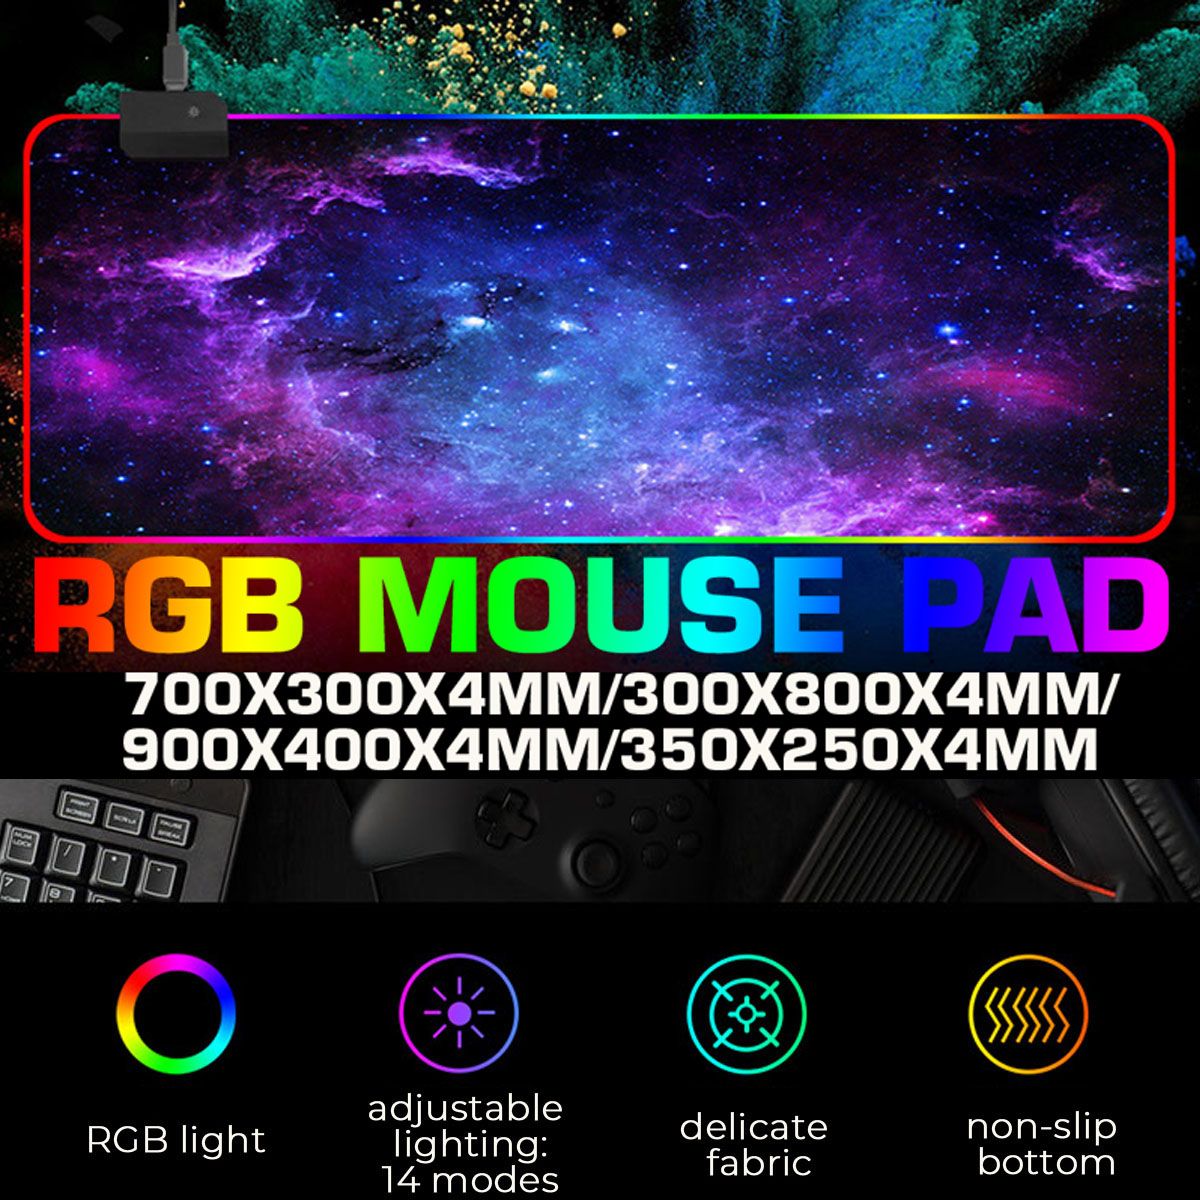 Wired-USB-Gaming-Mouse-Pad-RGB-LED-Desk-Mat-Cosmic-Nebula-Antislip-Luminous-Game-Mouse-Pad-1756139